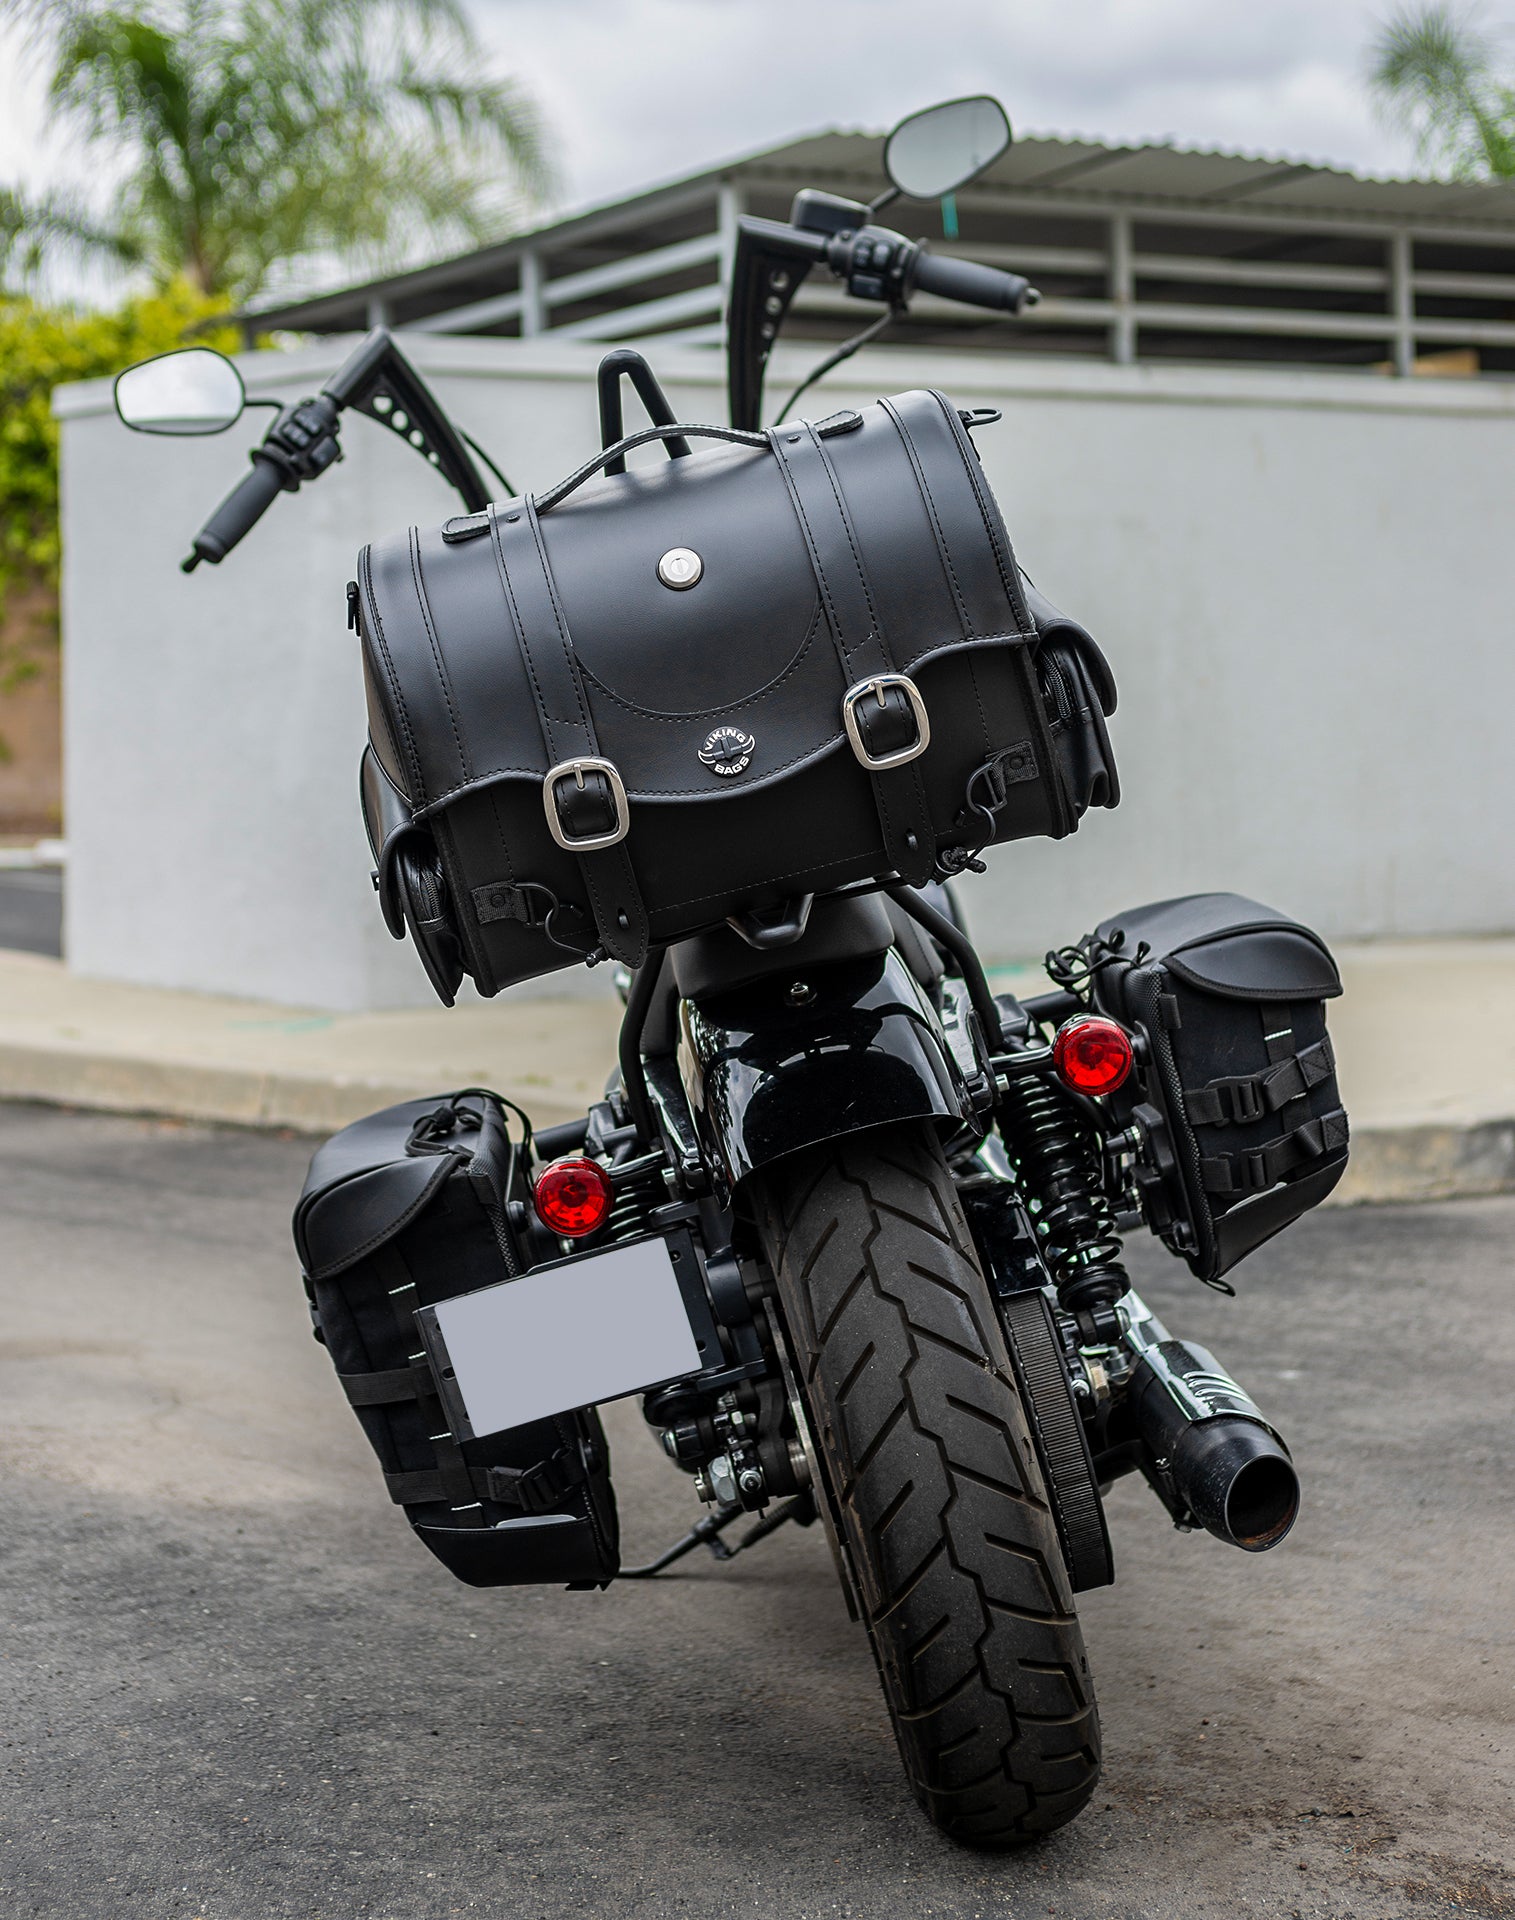 18L - Century Medium Yamaha Leather Motorcycle Tail Bag